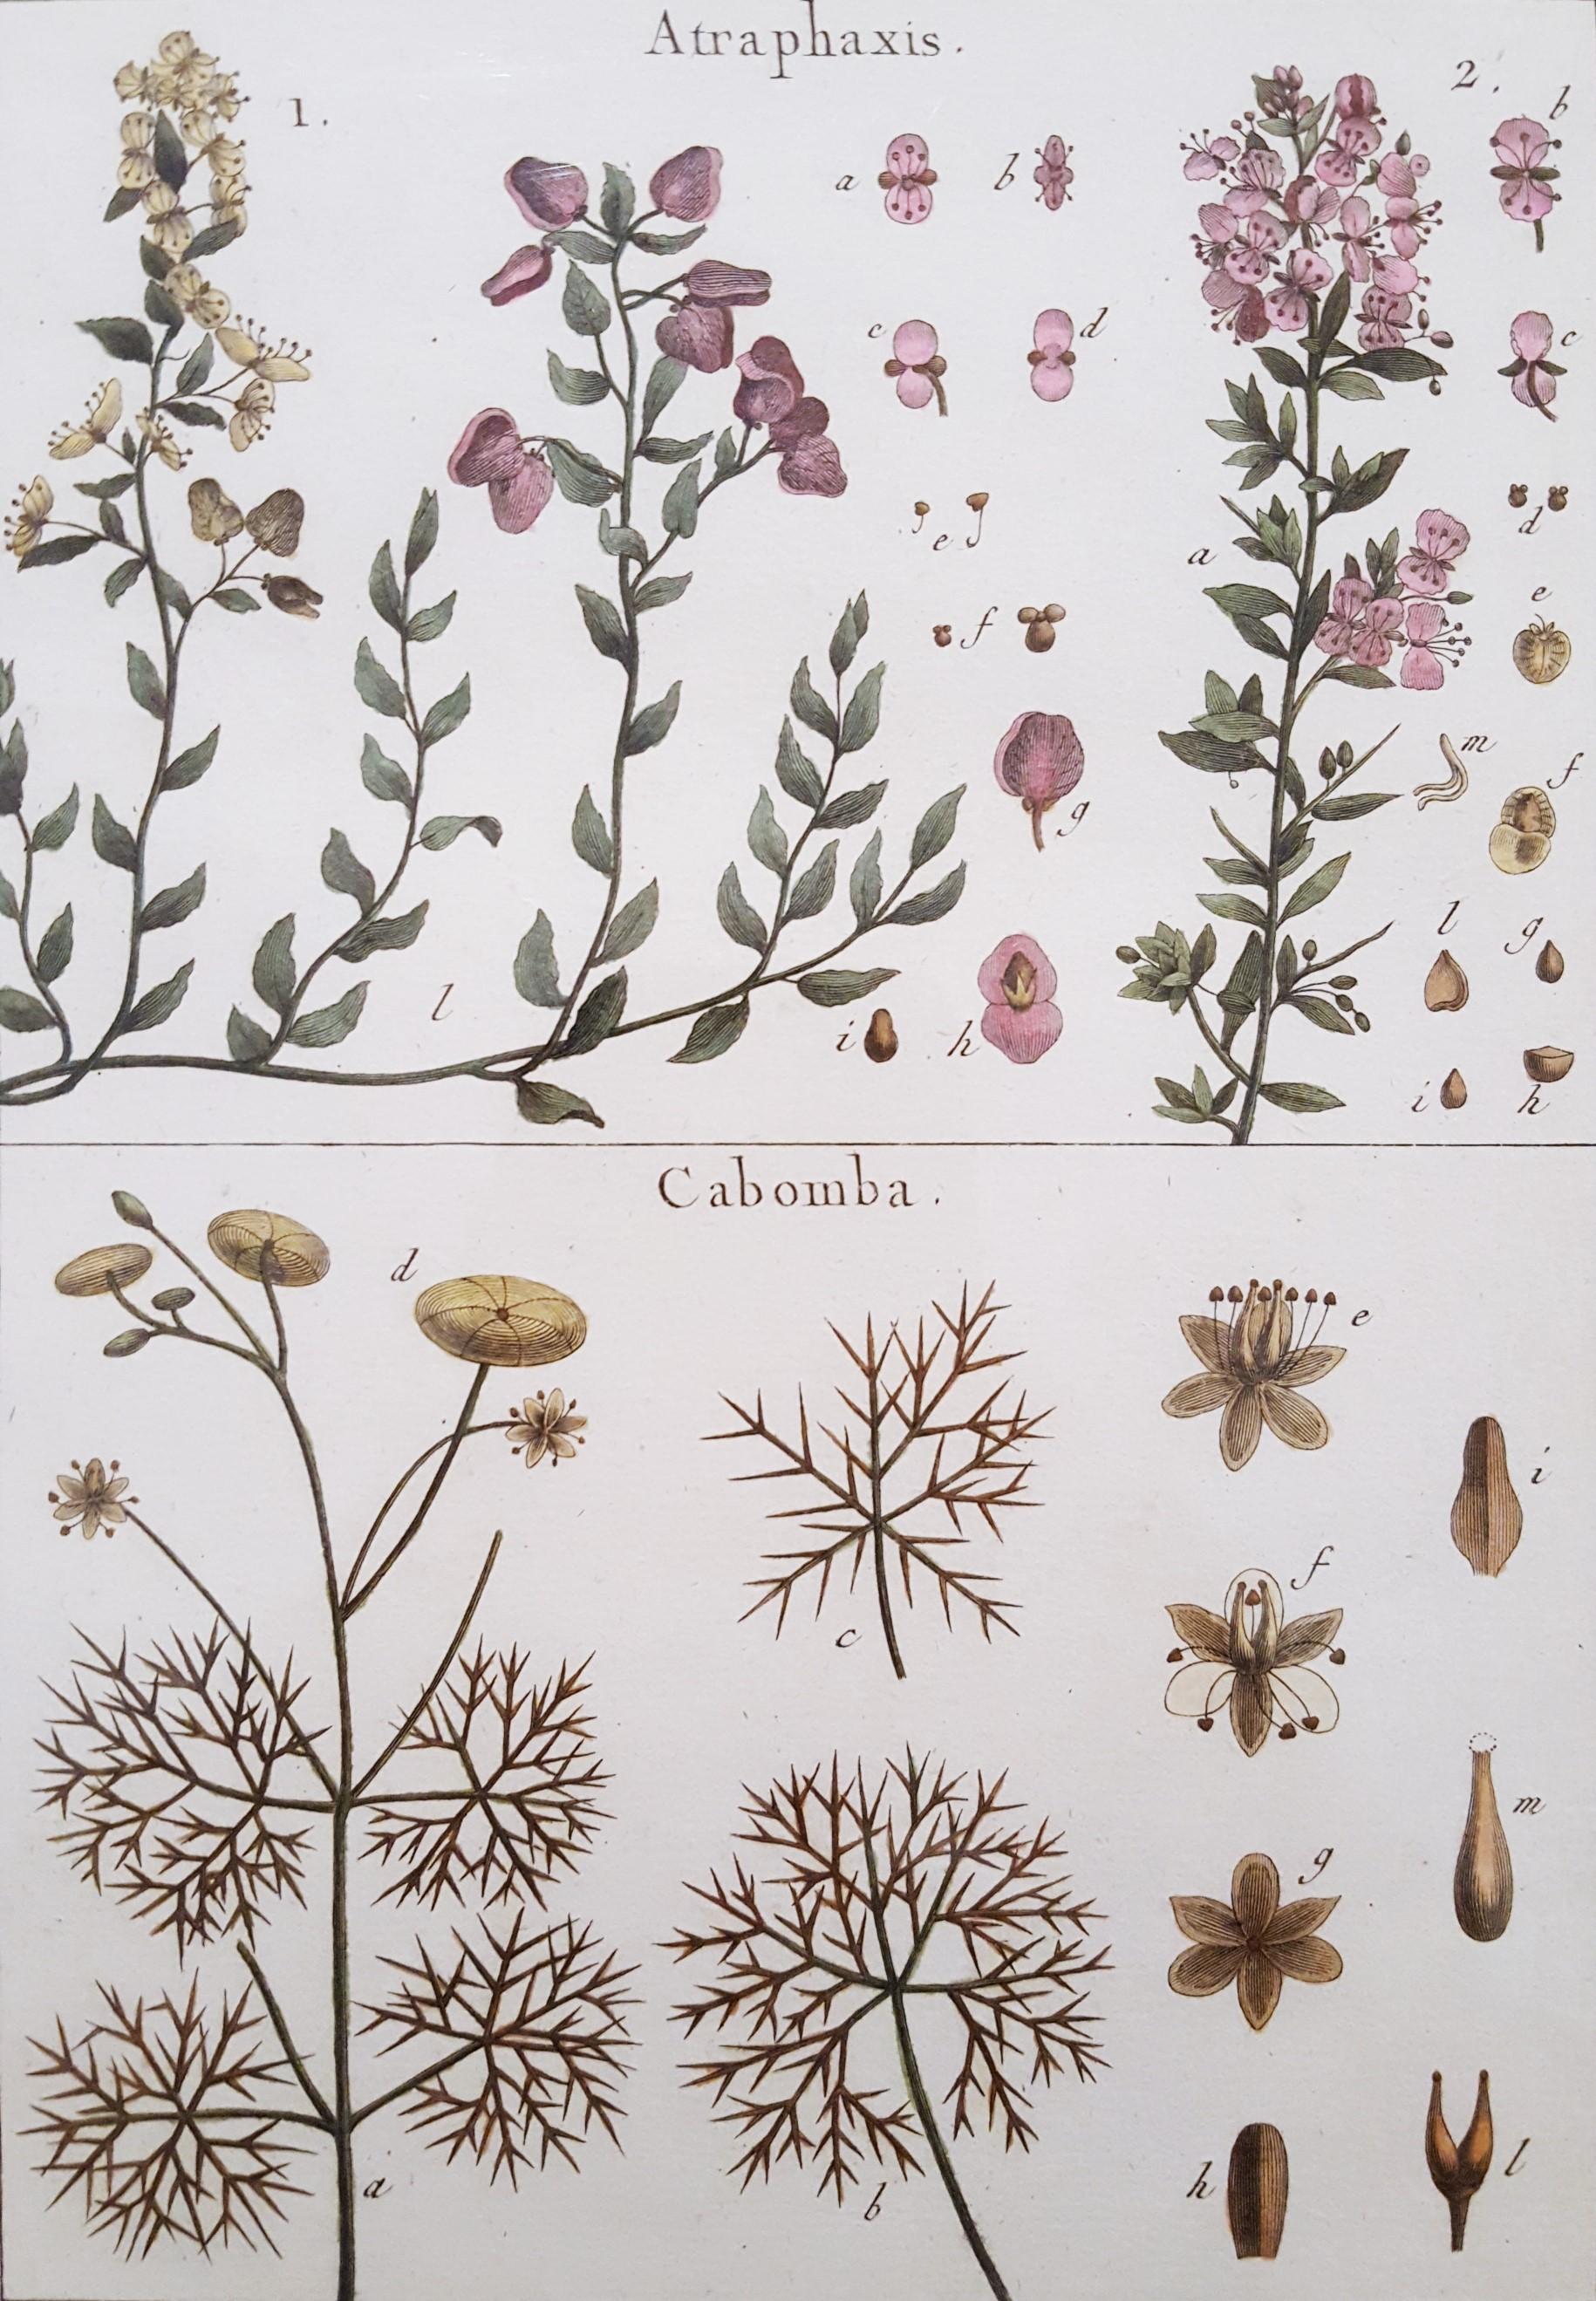 Still-Life Print Georges-Louis Leclerc, Comte de Buffon - Atraphaxis (Shrub) ; Cabomba (Carolina Fanwort) /// Botanical Botany Plants Art